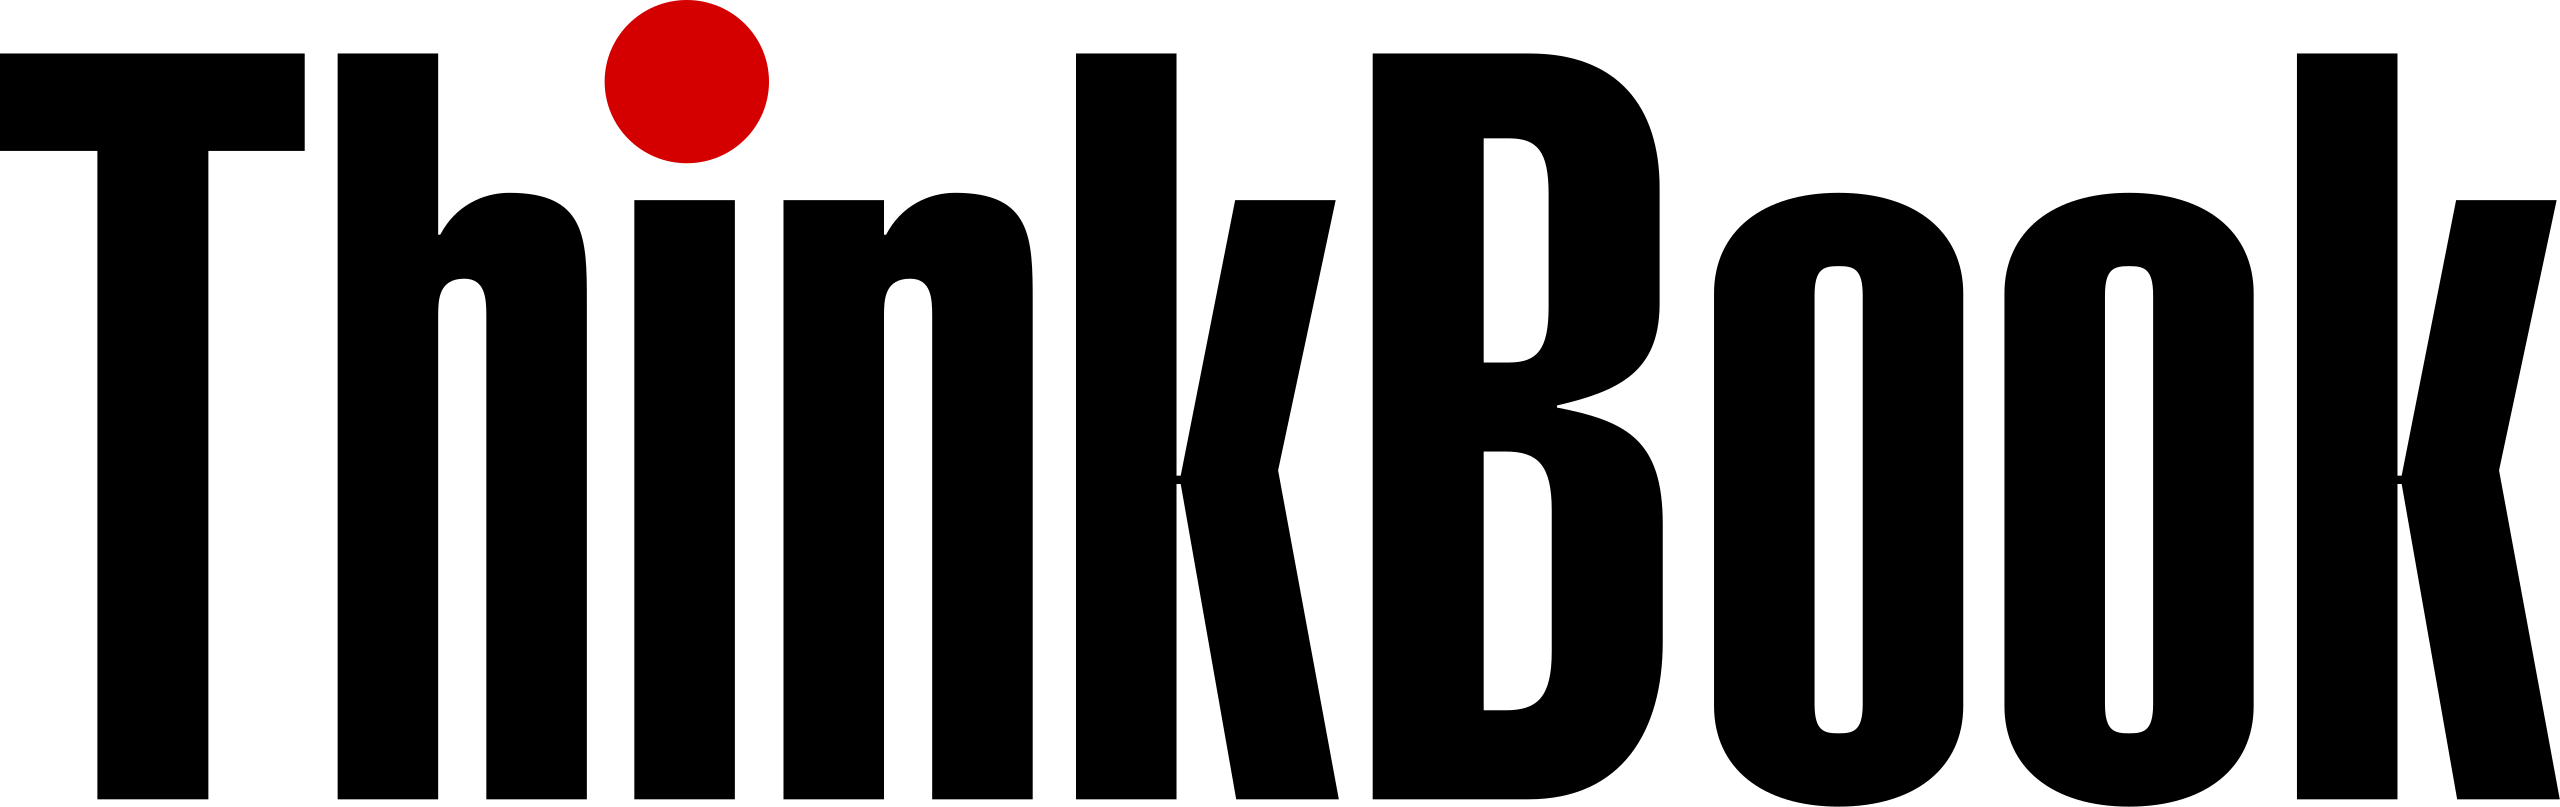 thinkbook logo